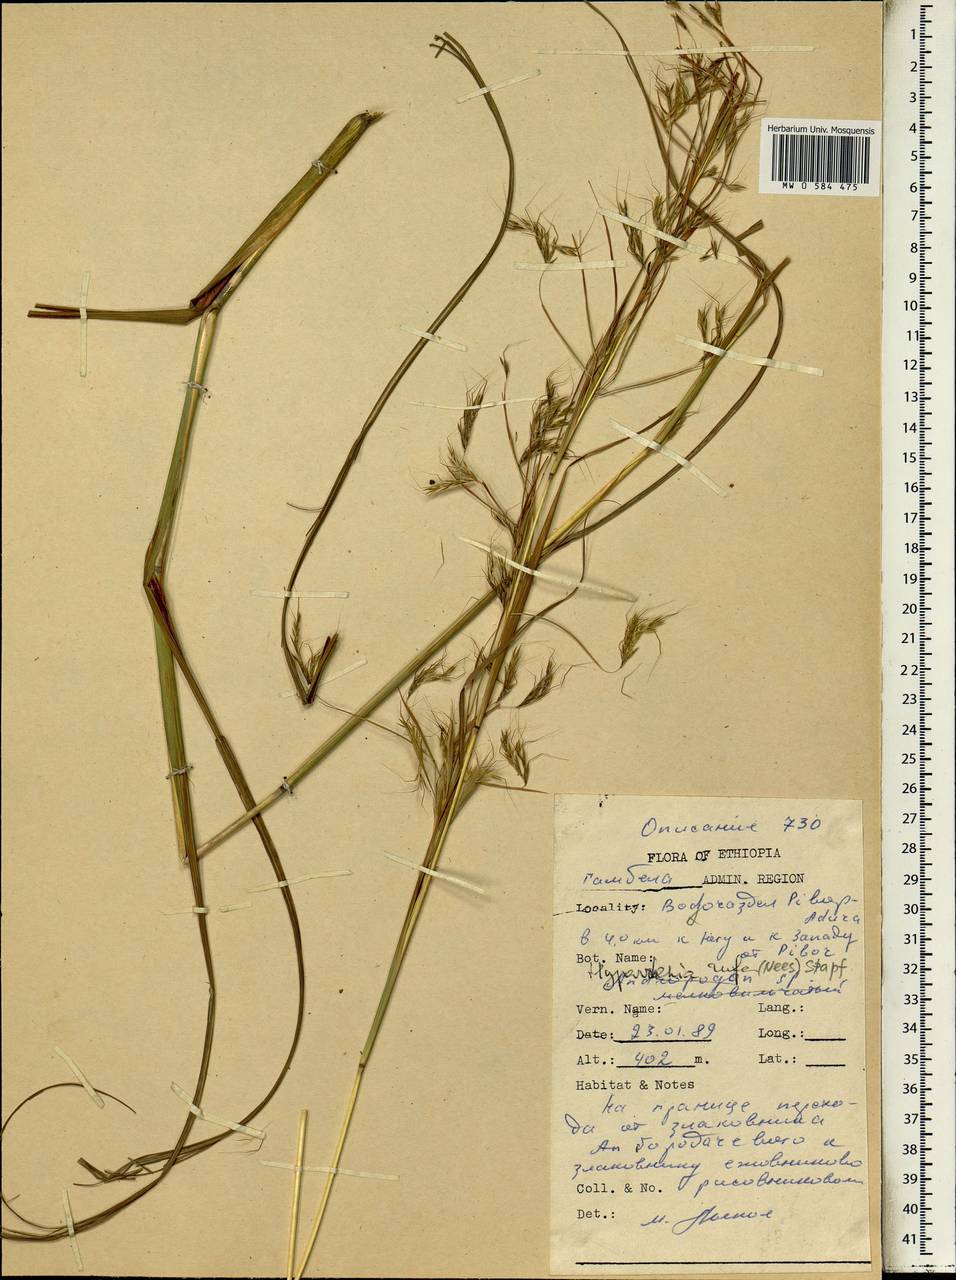 Hyparrhenia rufa (Nees) Stapf, Africa (AFR) (Ethiopia)